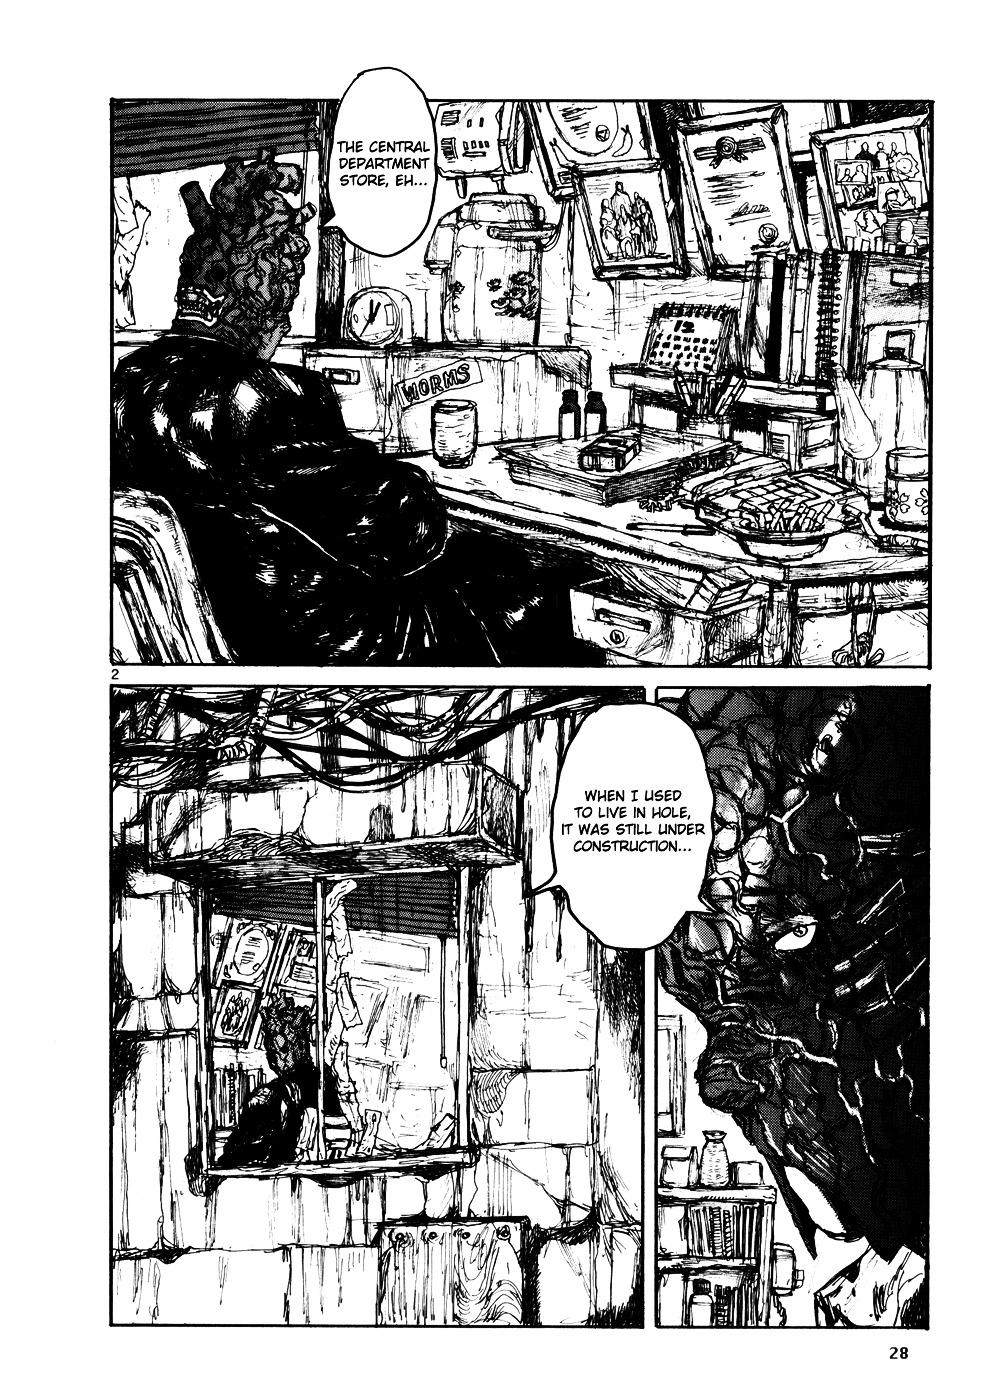 Dorohedoro Chapter 103 : Buggy Harassment page 2 - Mangakakalot